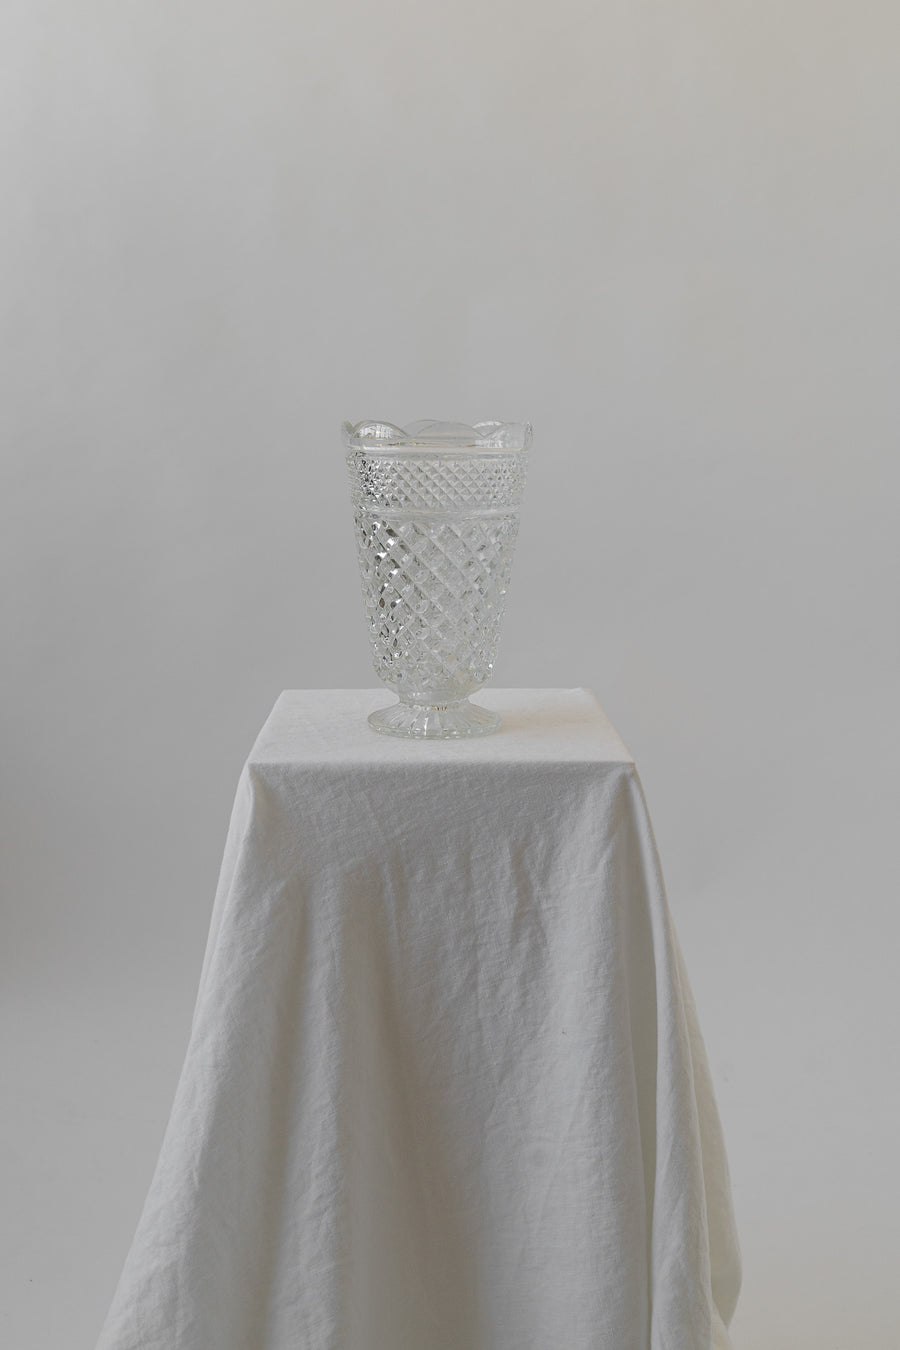 Vintage Crystal Cut Vase